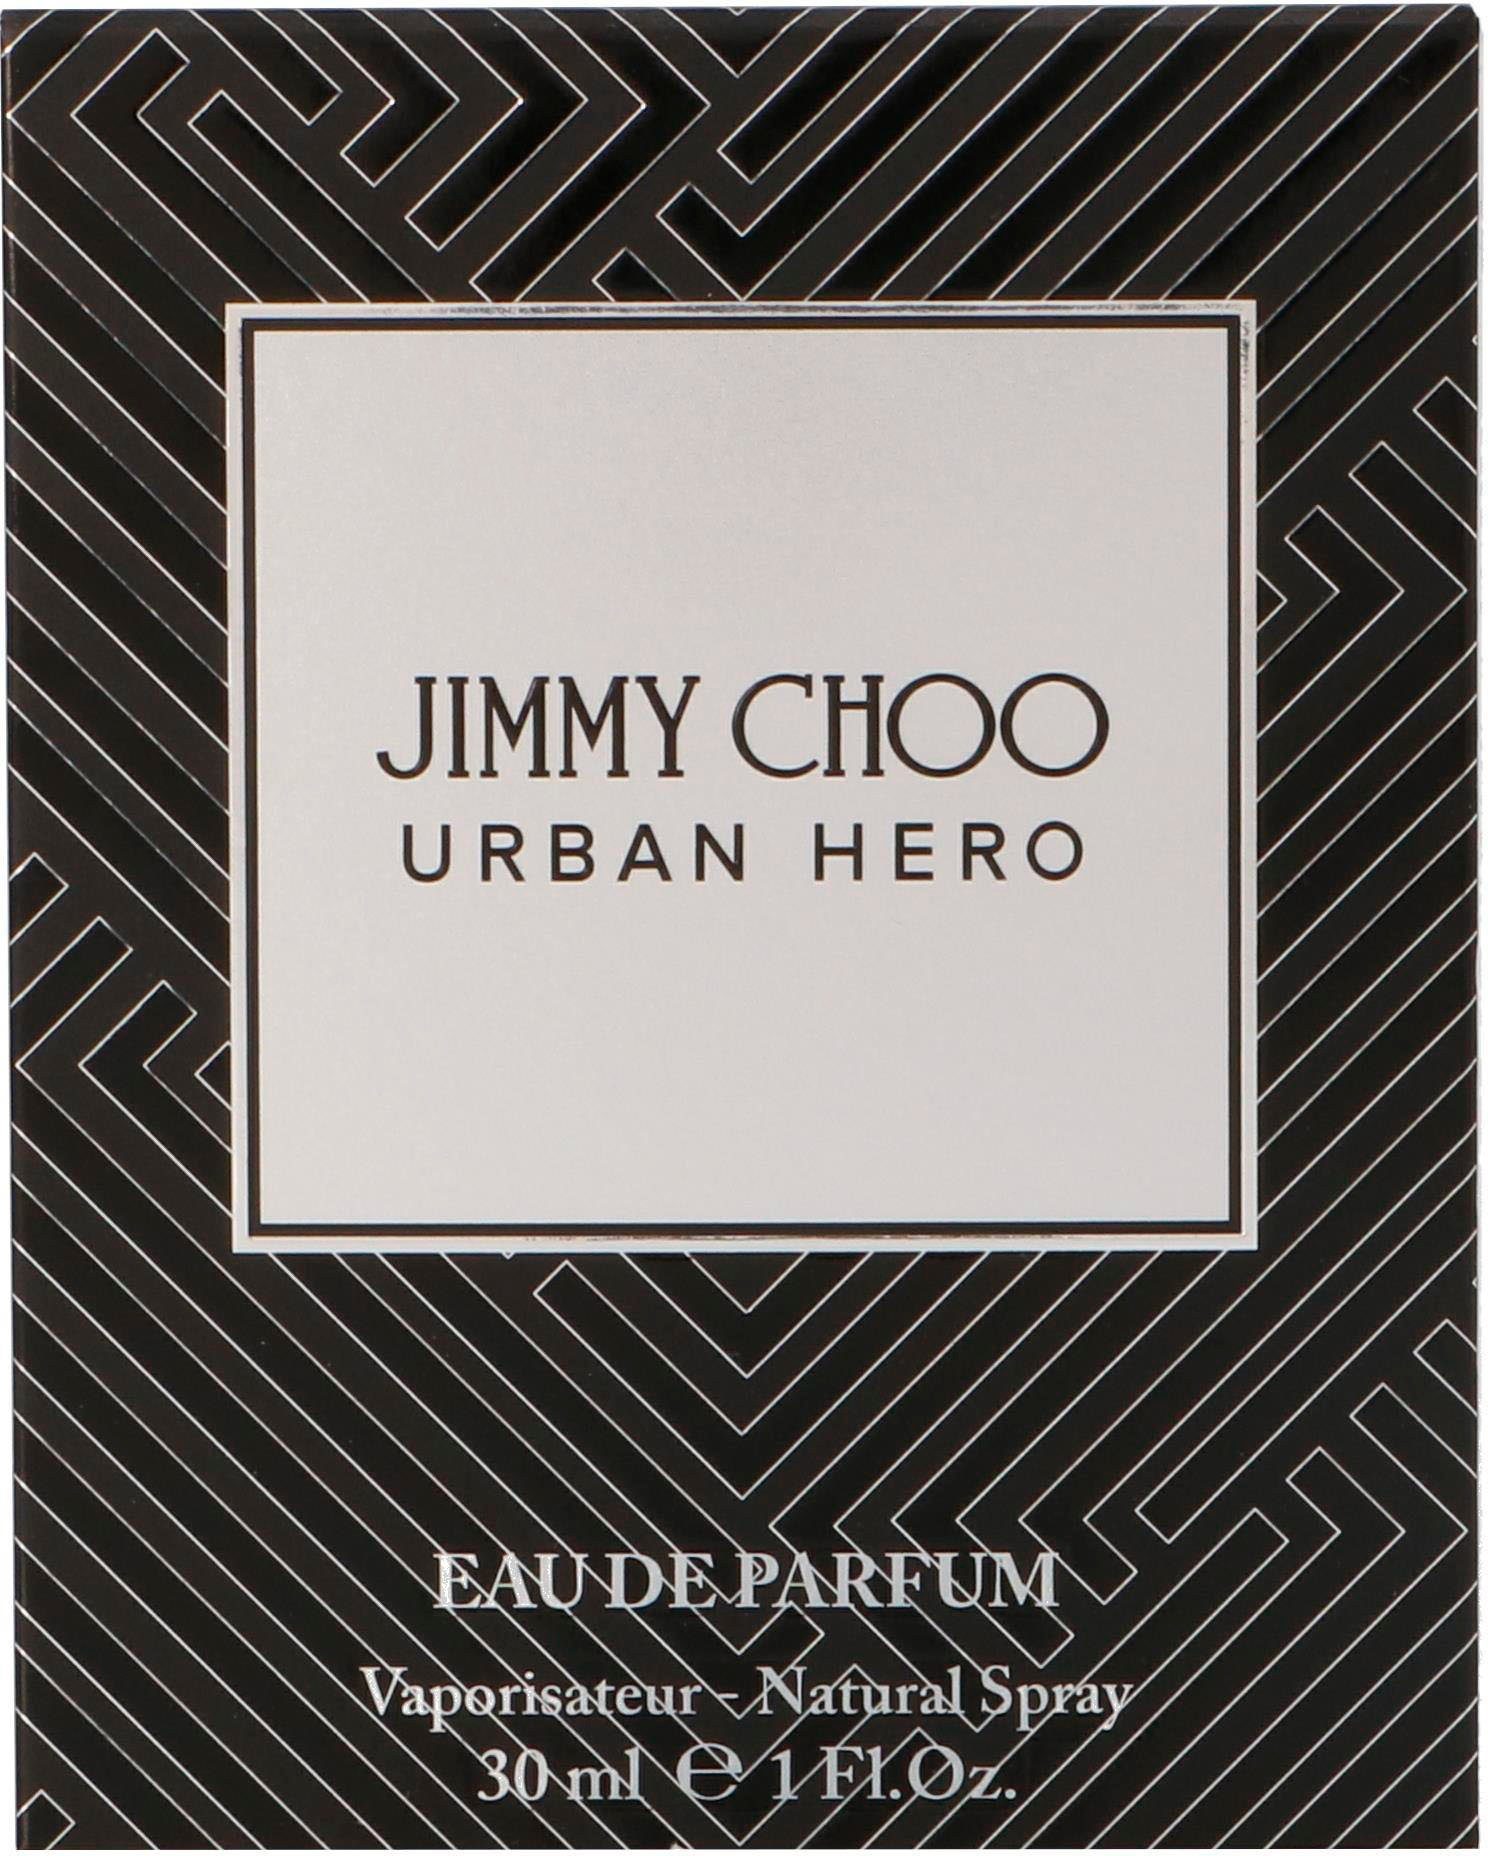 JIMMY Hero Urban CHOO Parfum de Eau